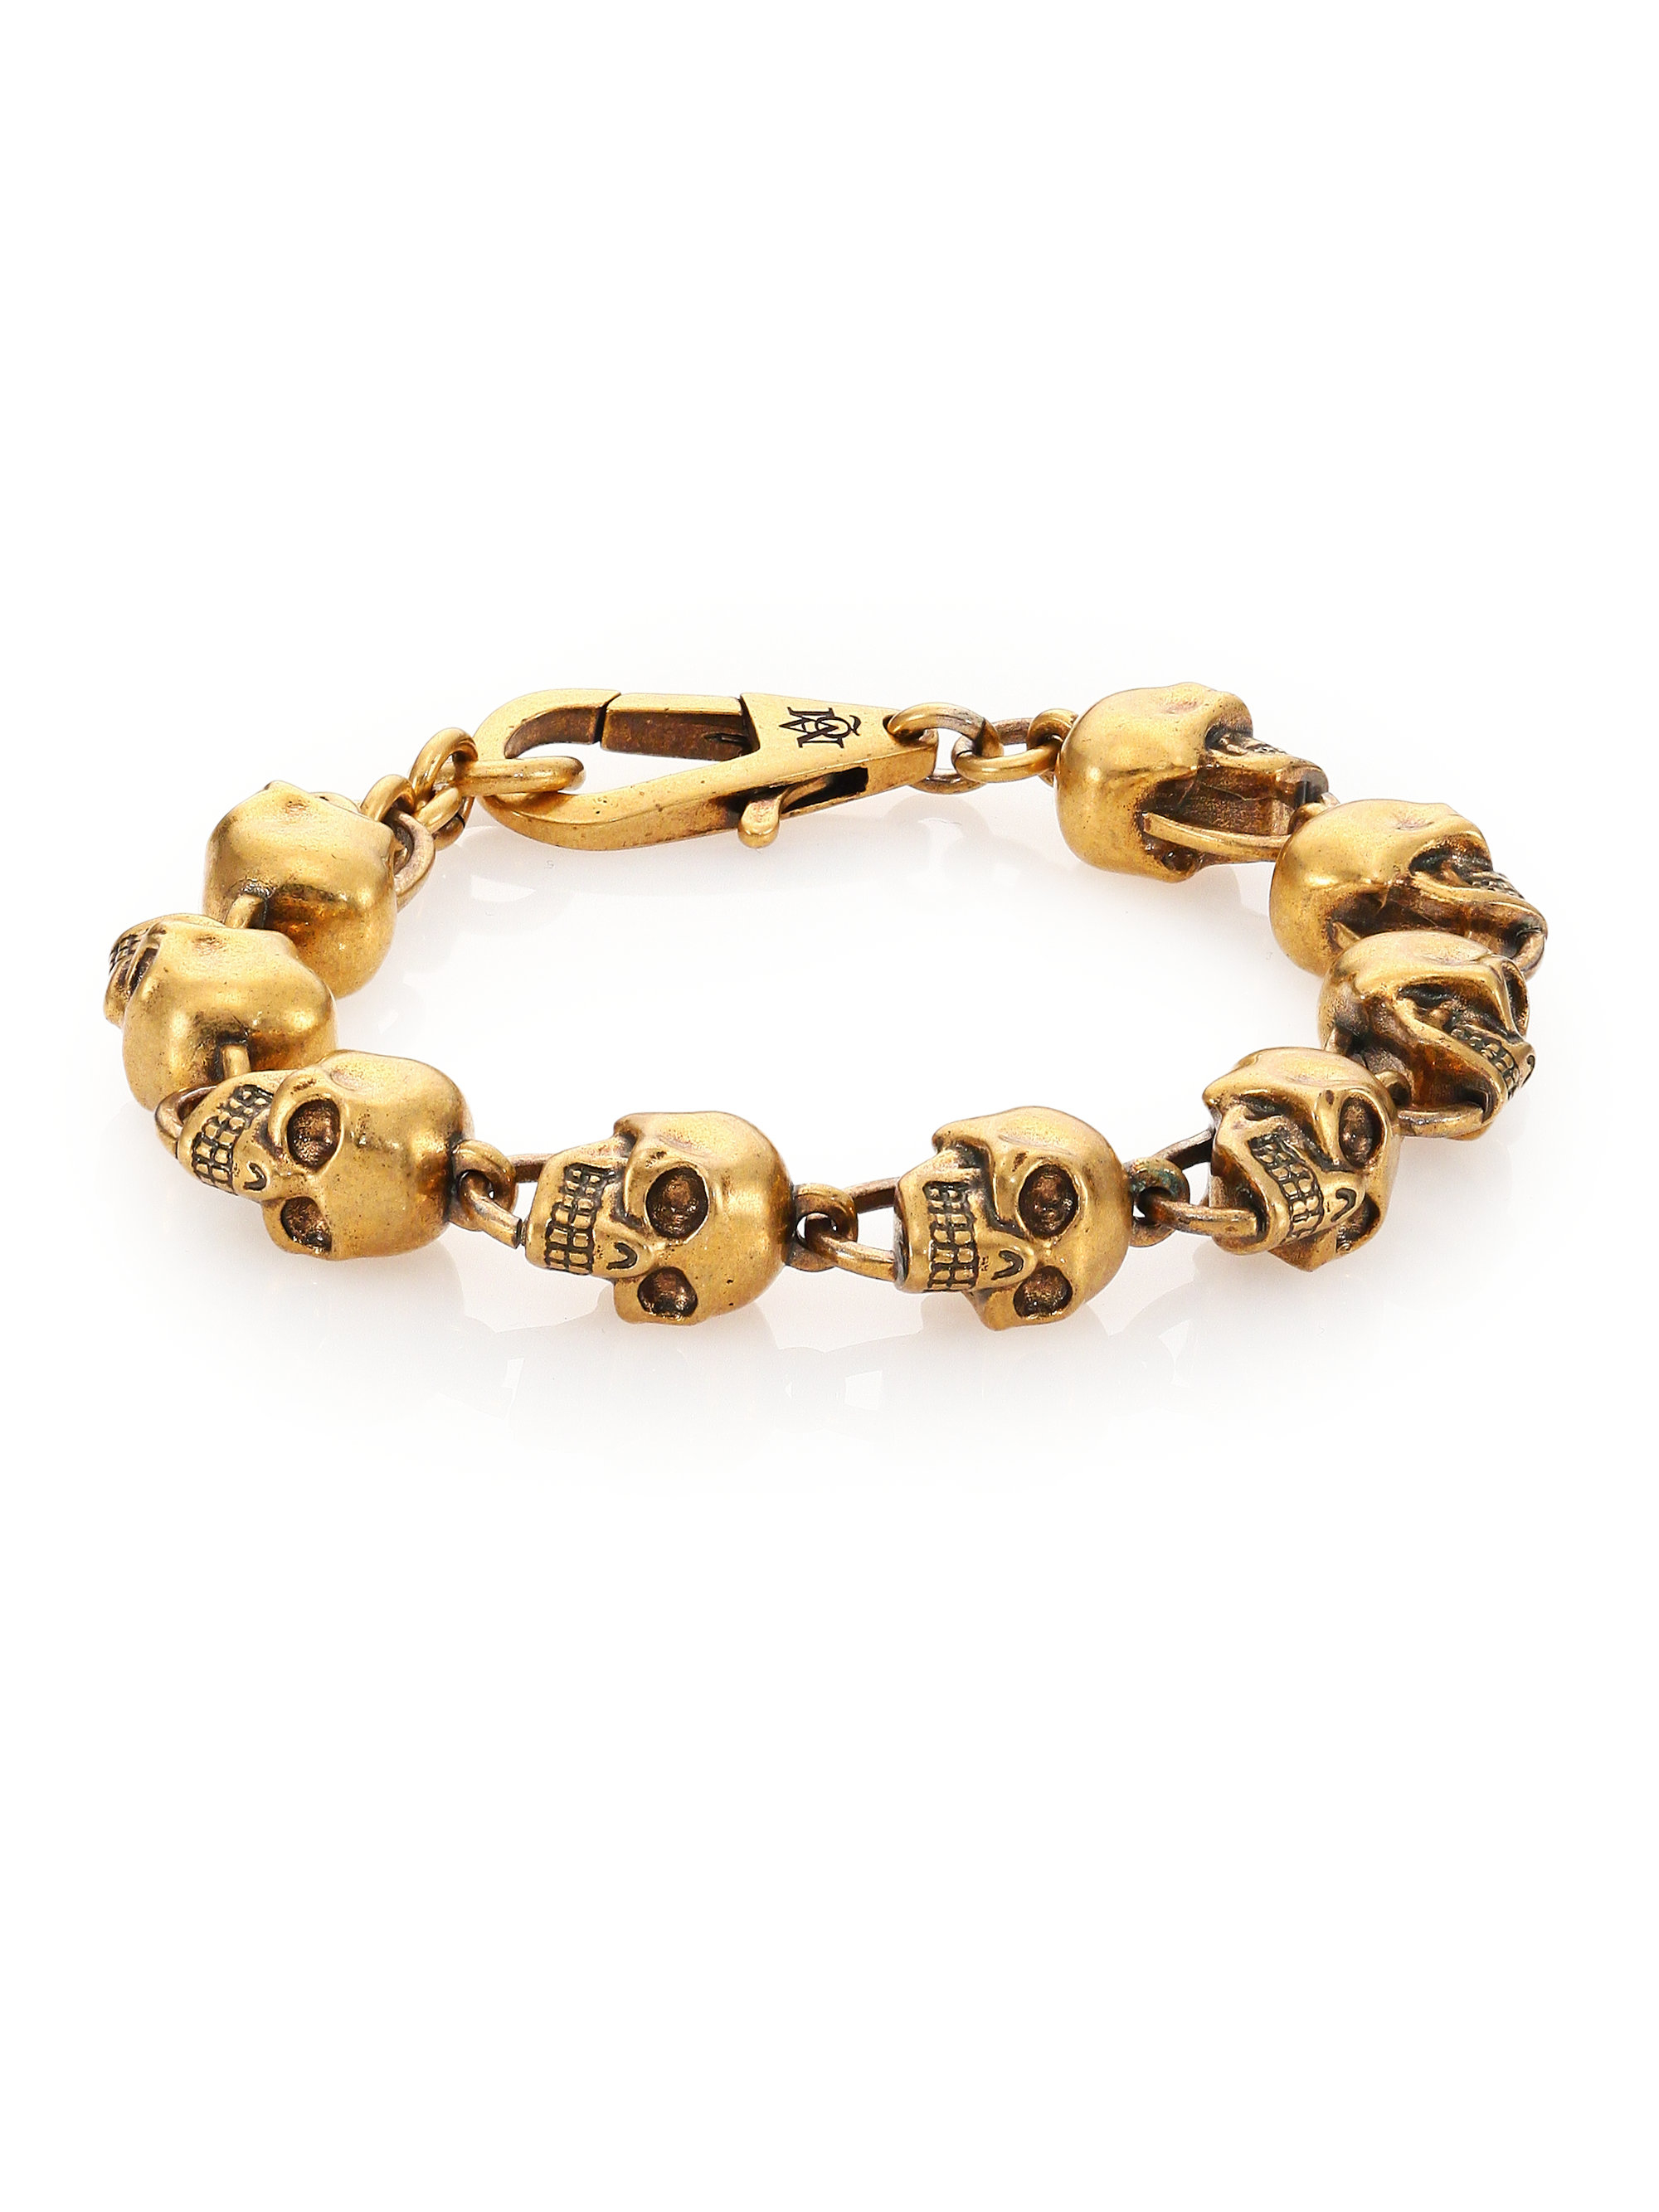 alexander mcqueen gold skull bracelet